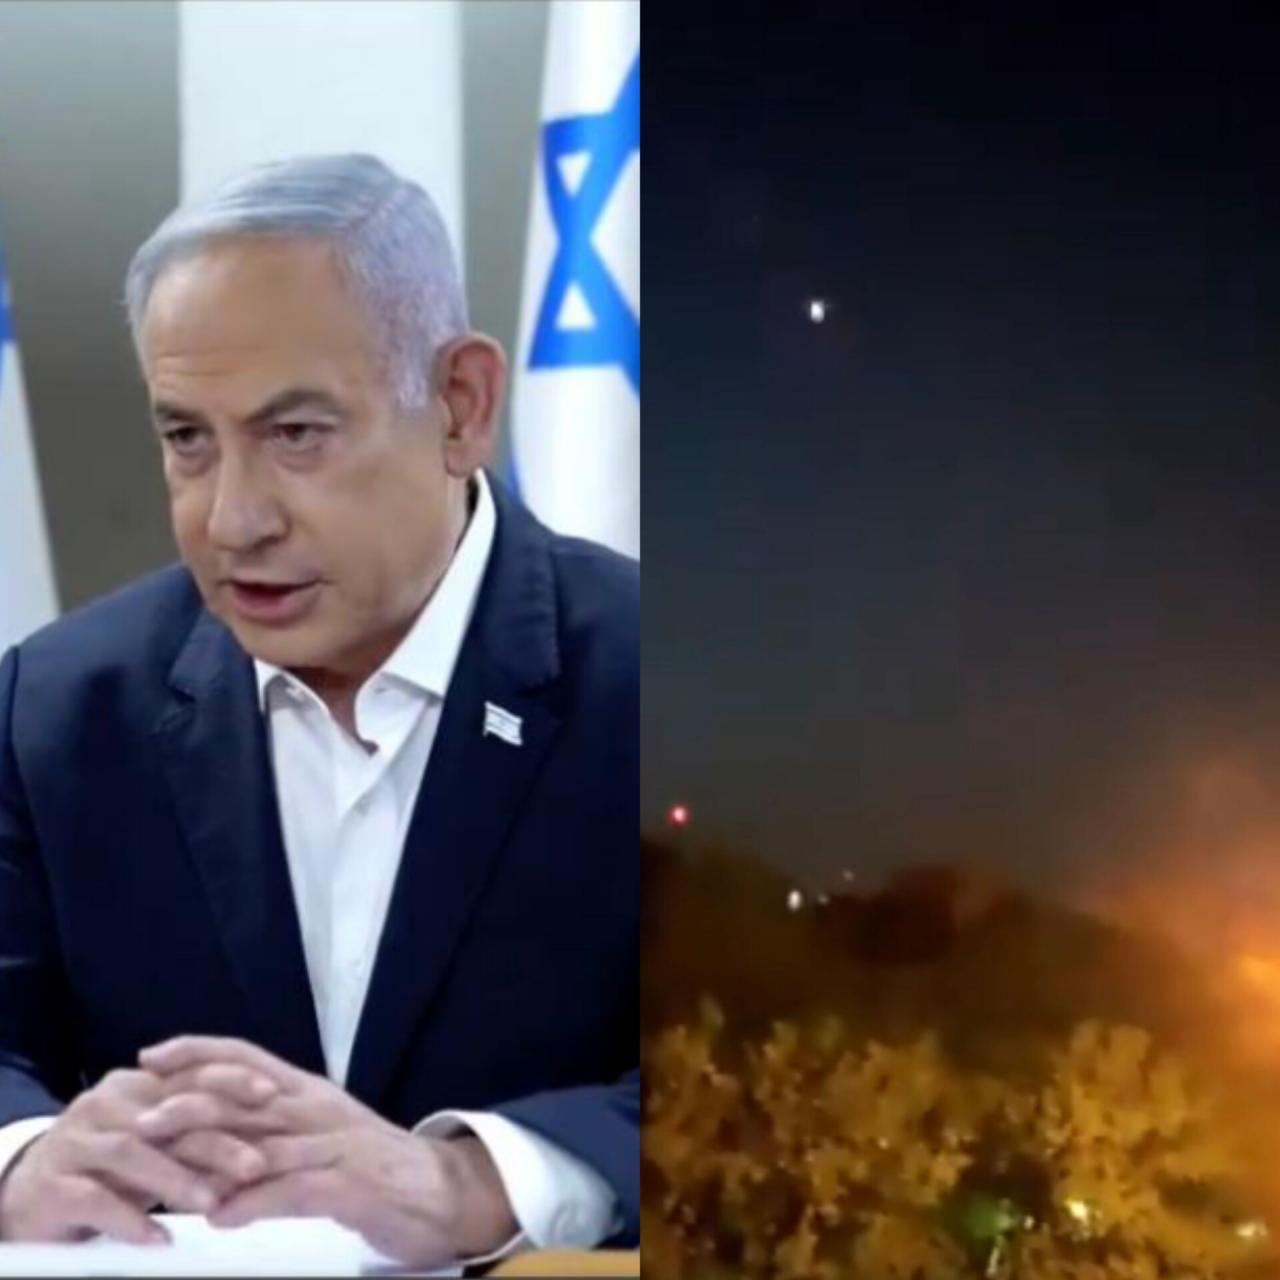 Israel attacks Iran on the birthday of Iran